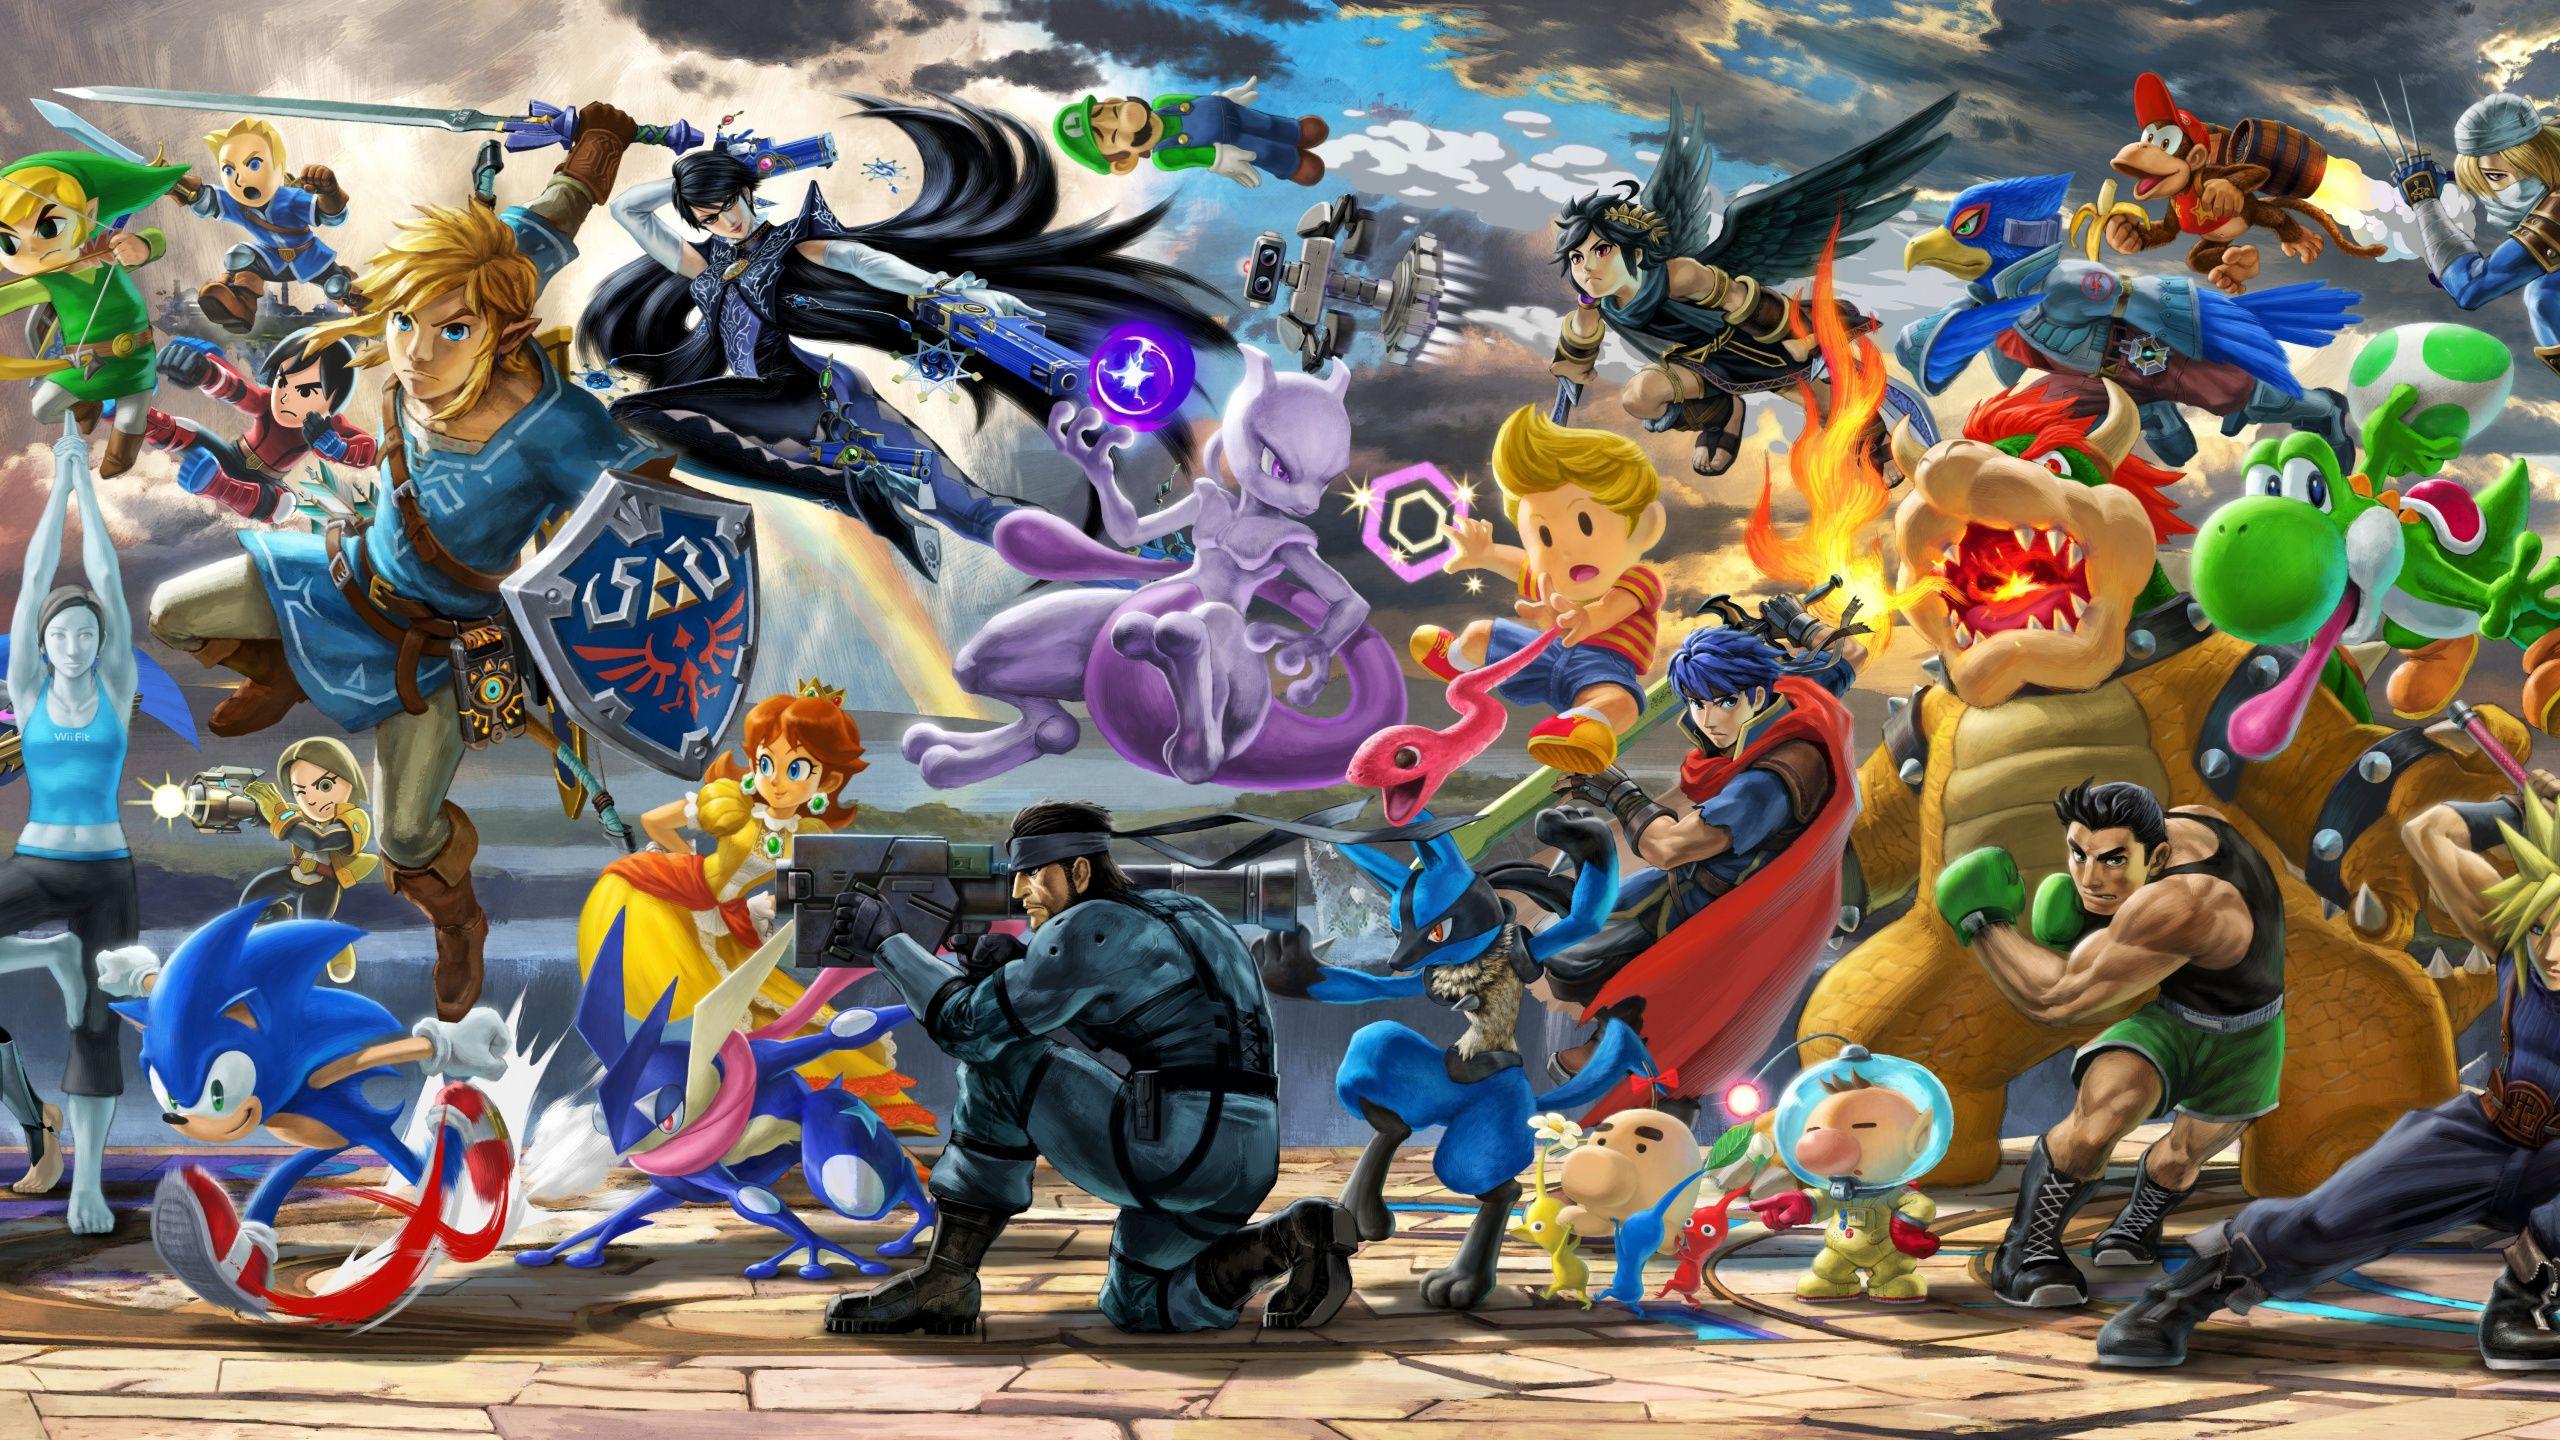 Super Smash Bros Wallpapers